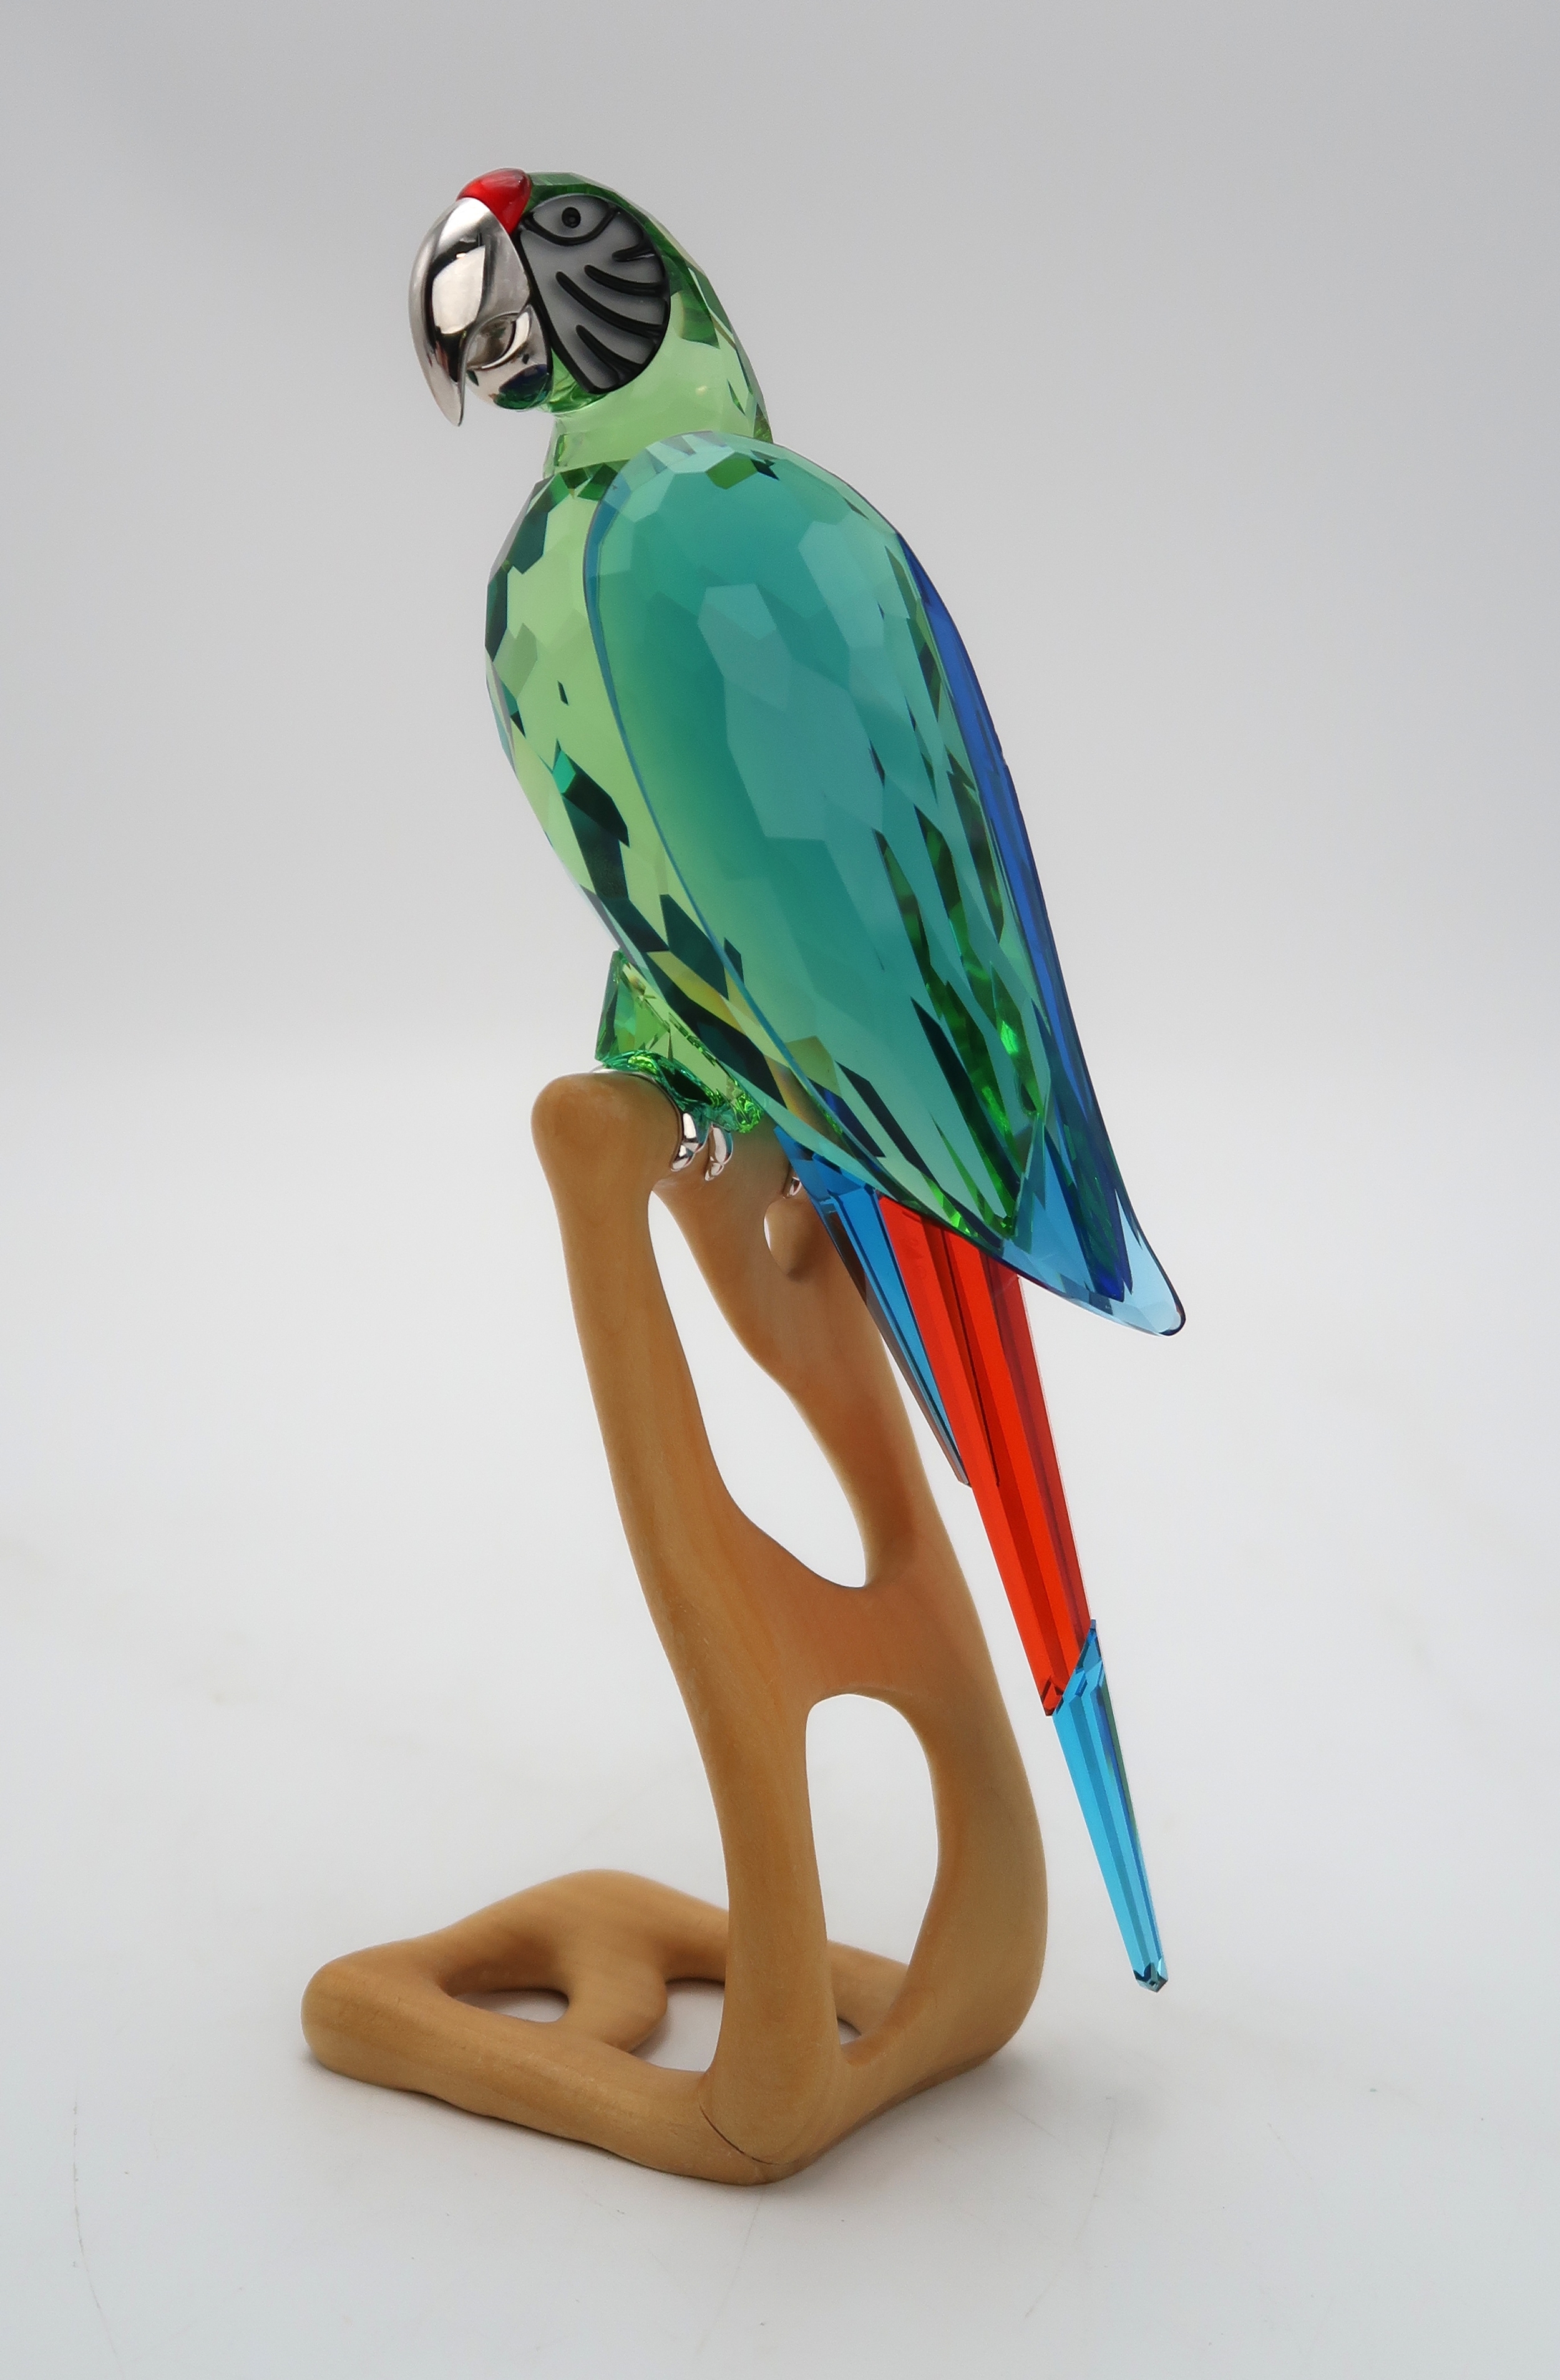 A SWAROVSKI CRYSTAL BIRDS OF PARADISE FIGUREof a Macaw on wooden base, 23cm  high